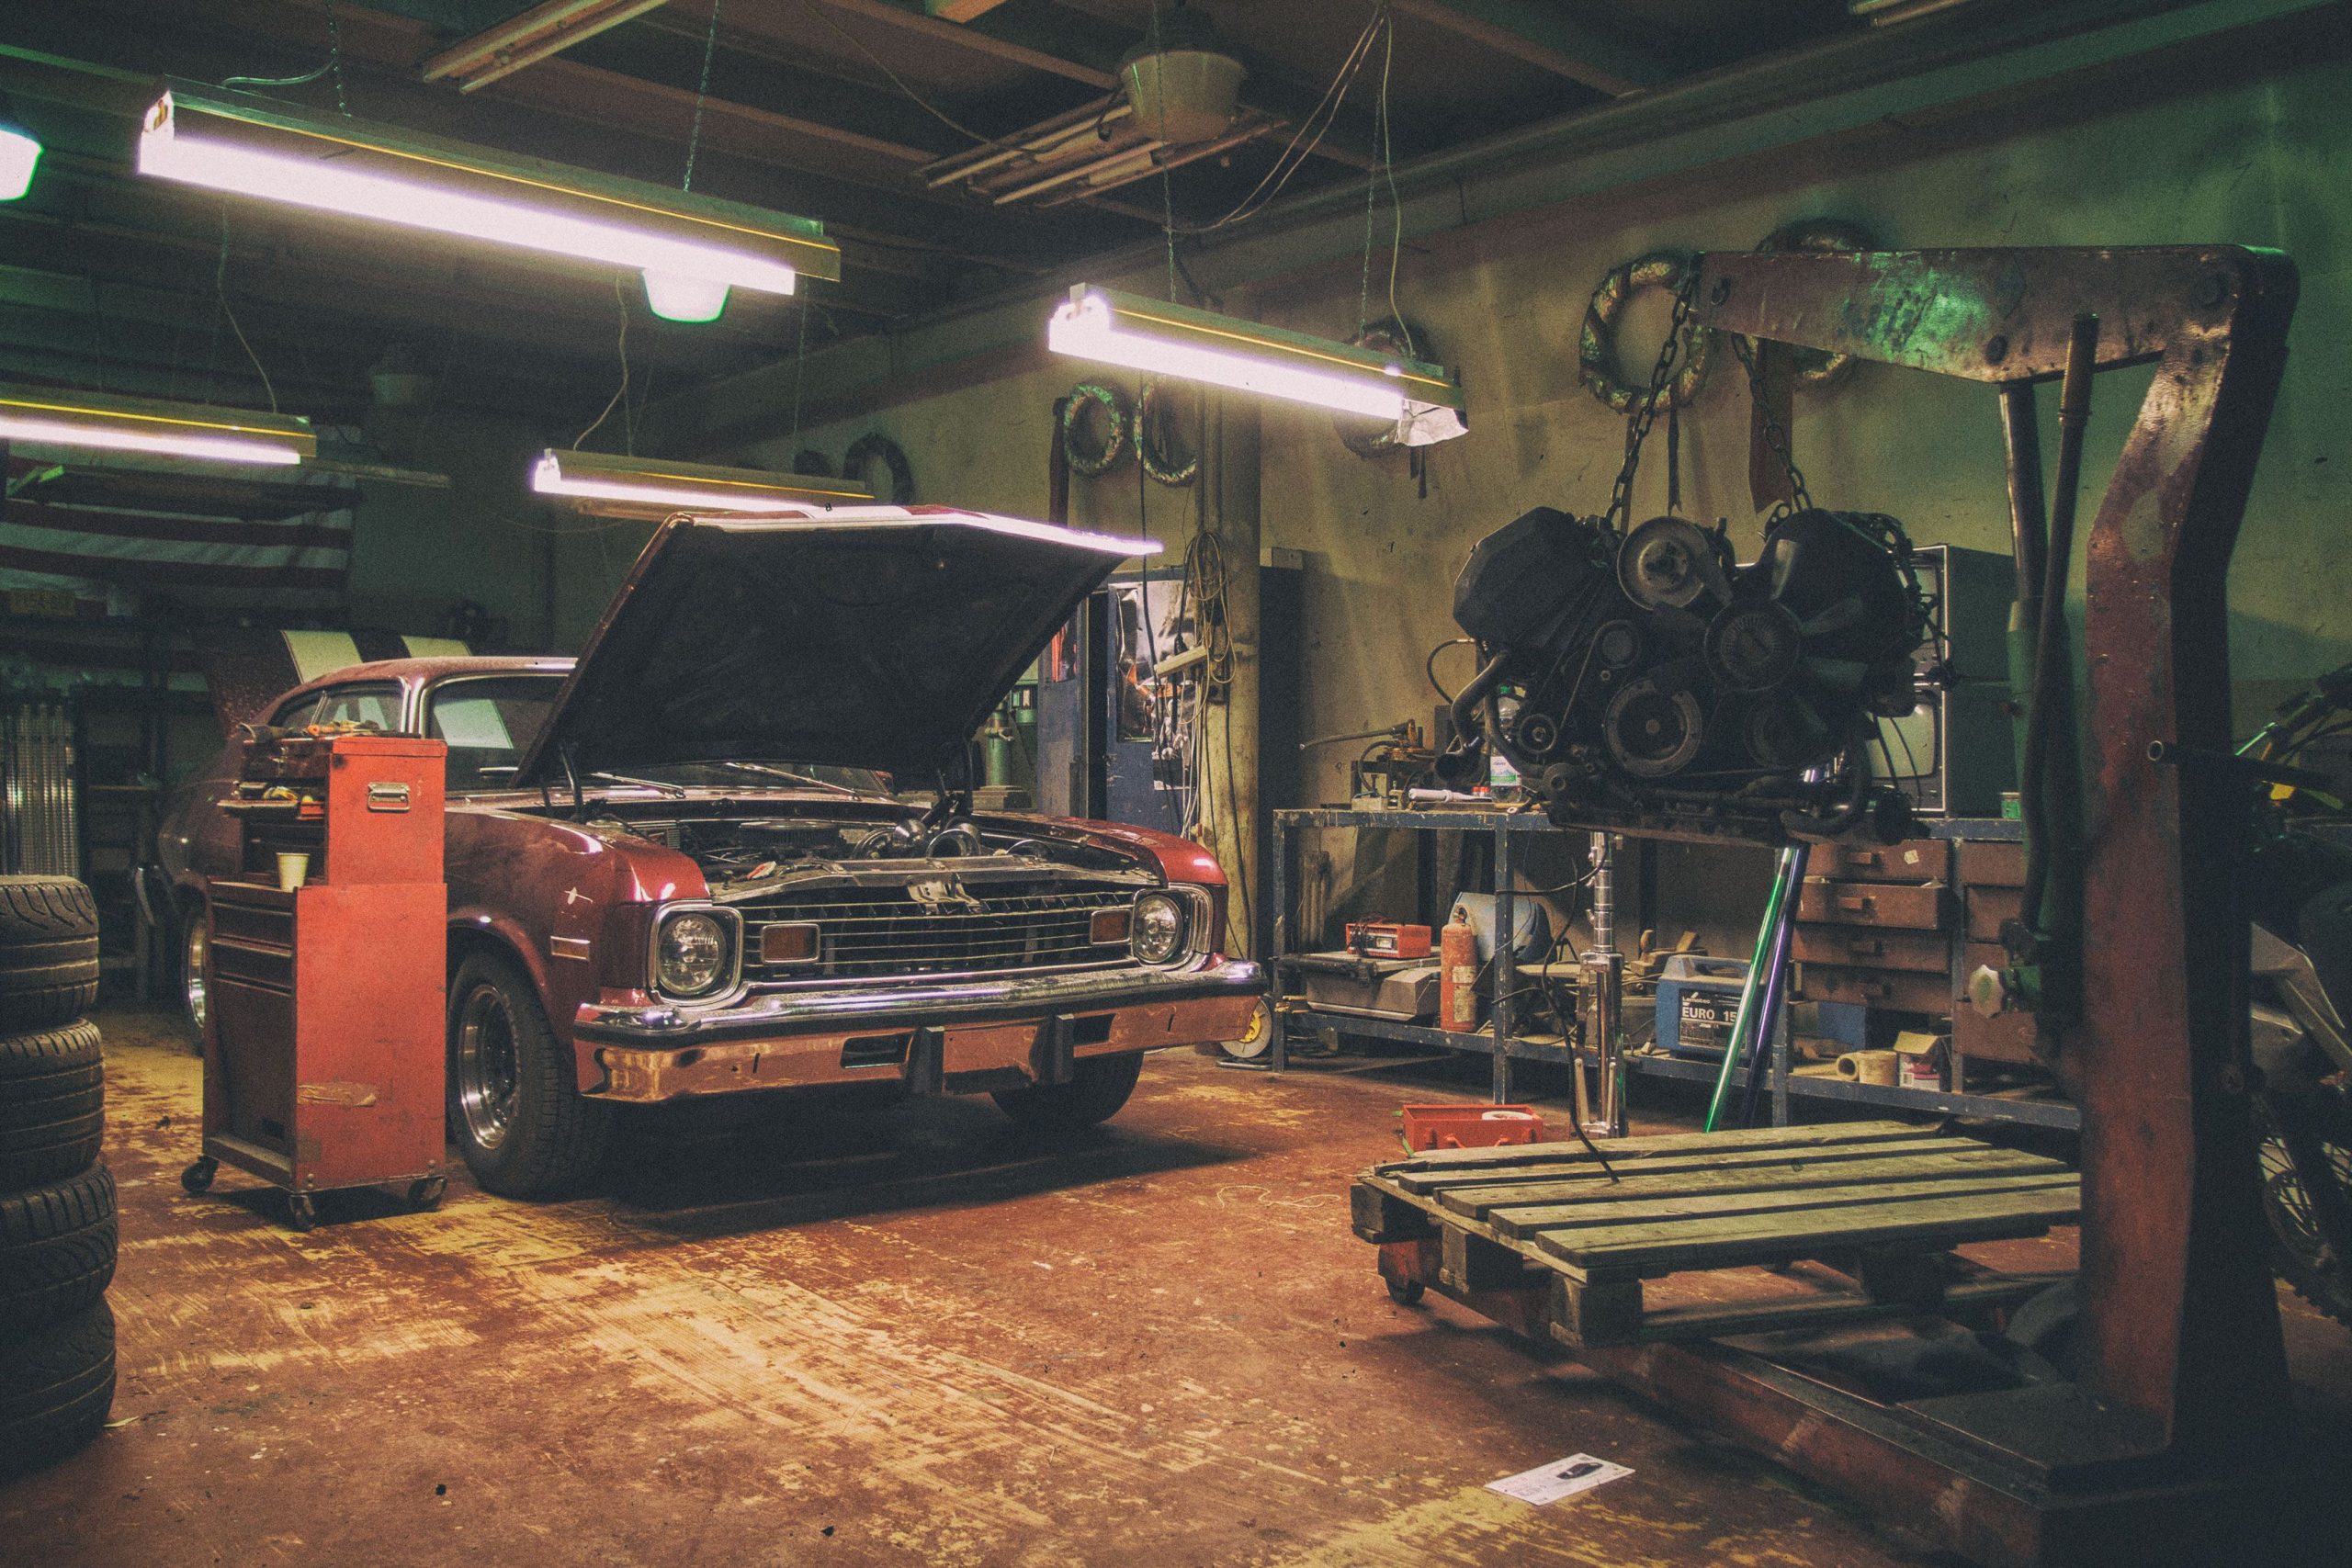 Automotive Repair and Restoration Space